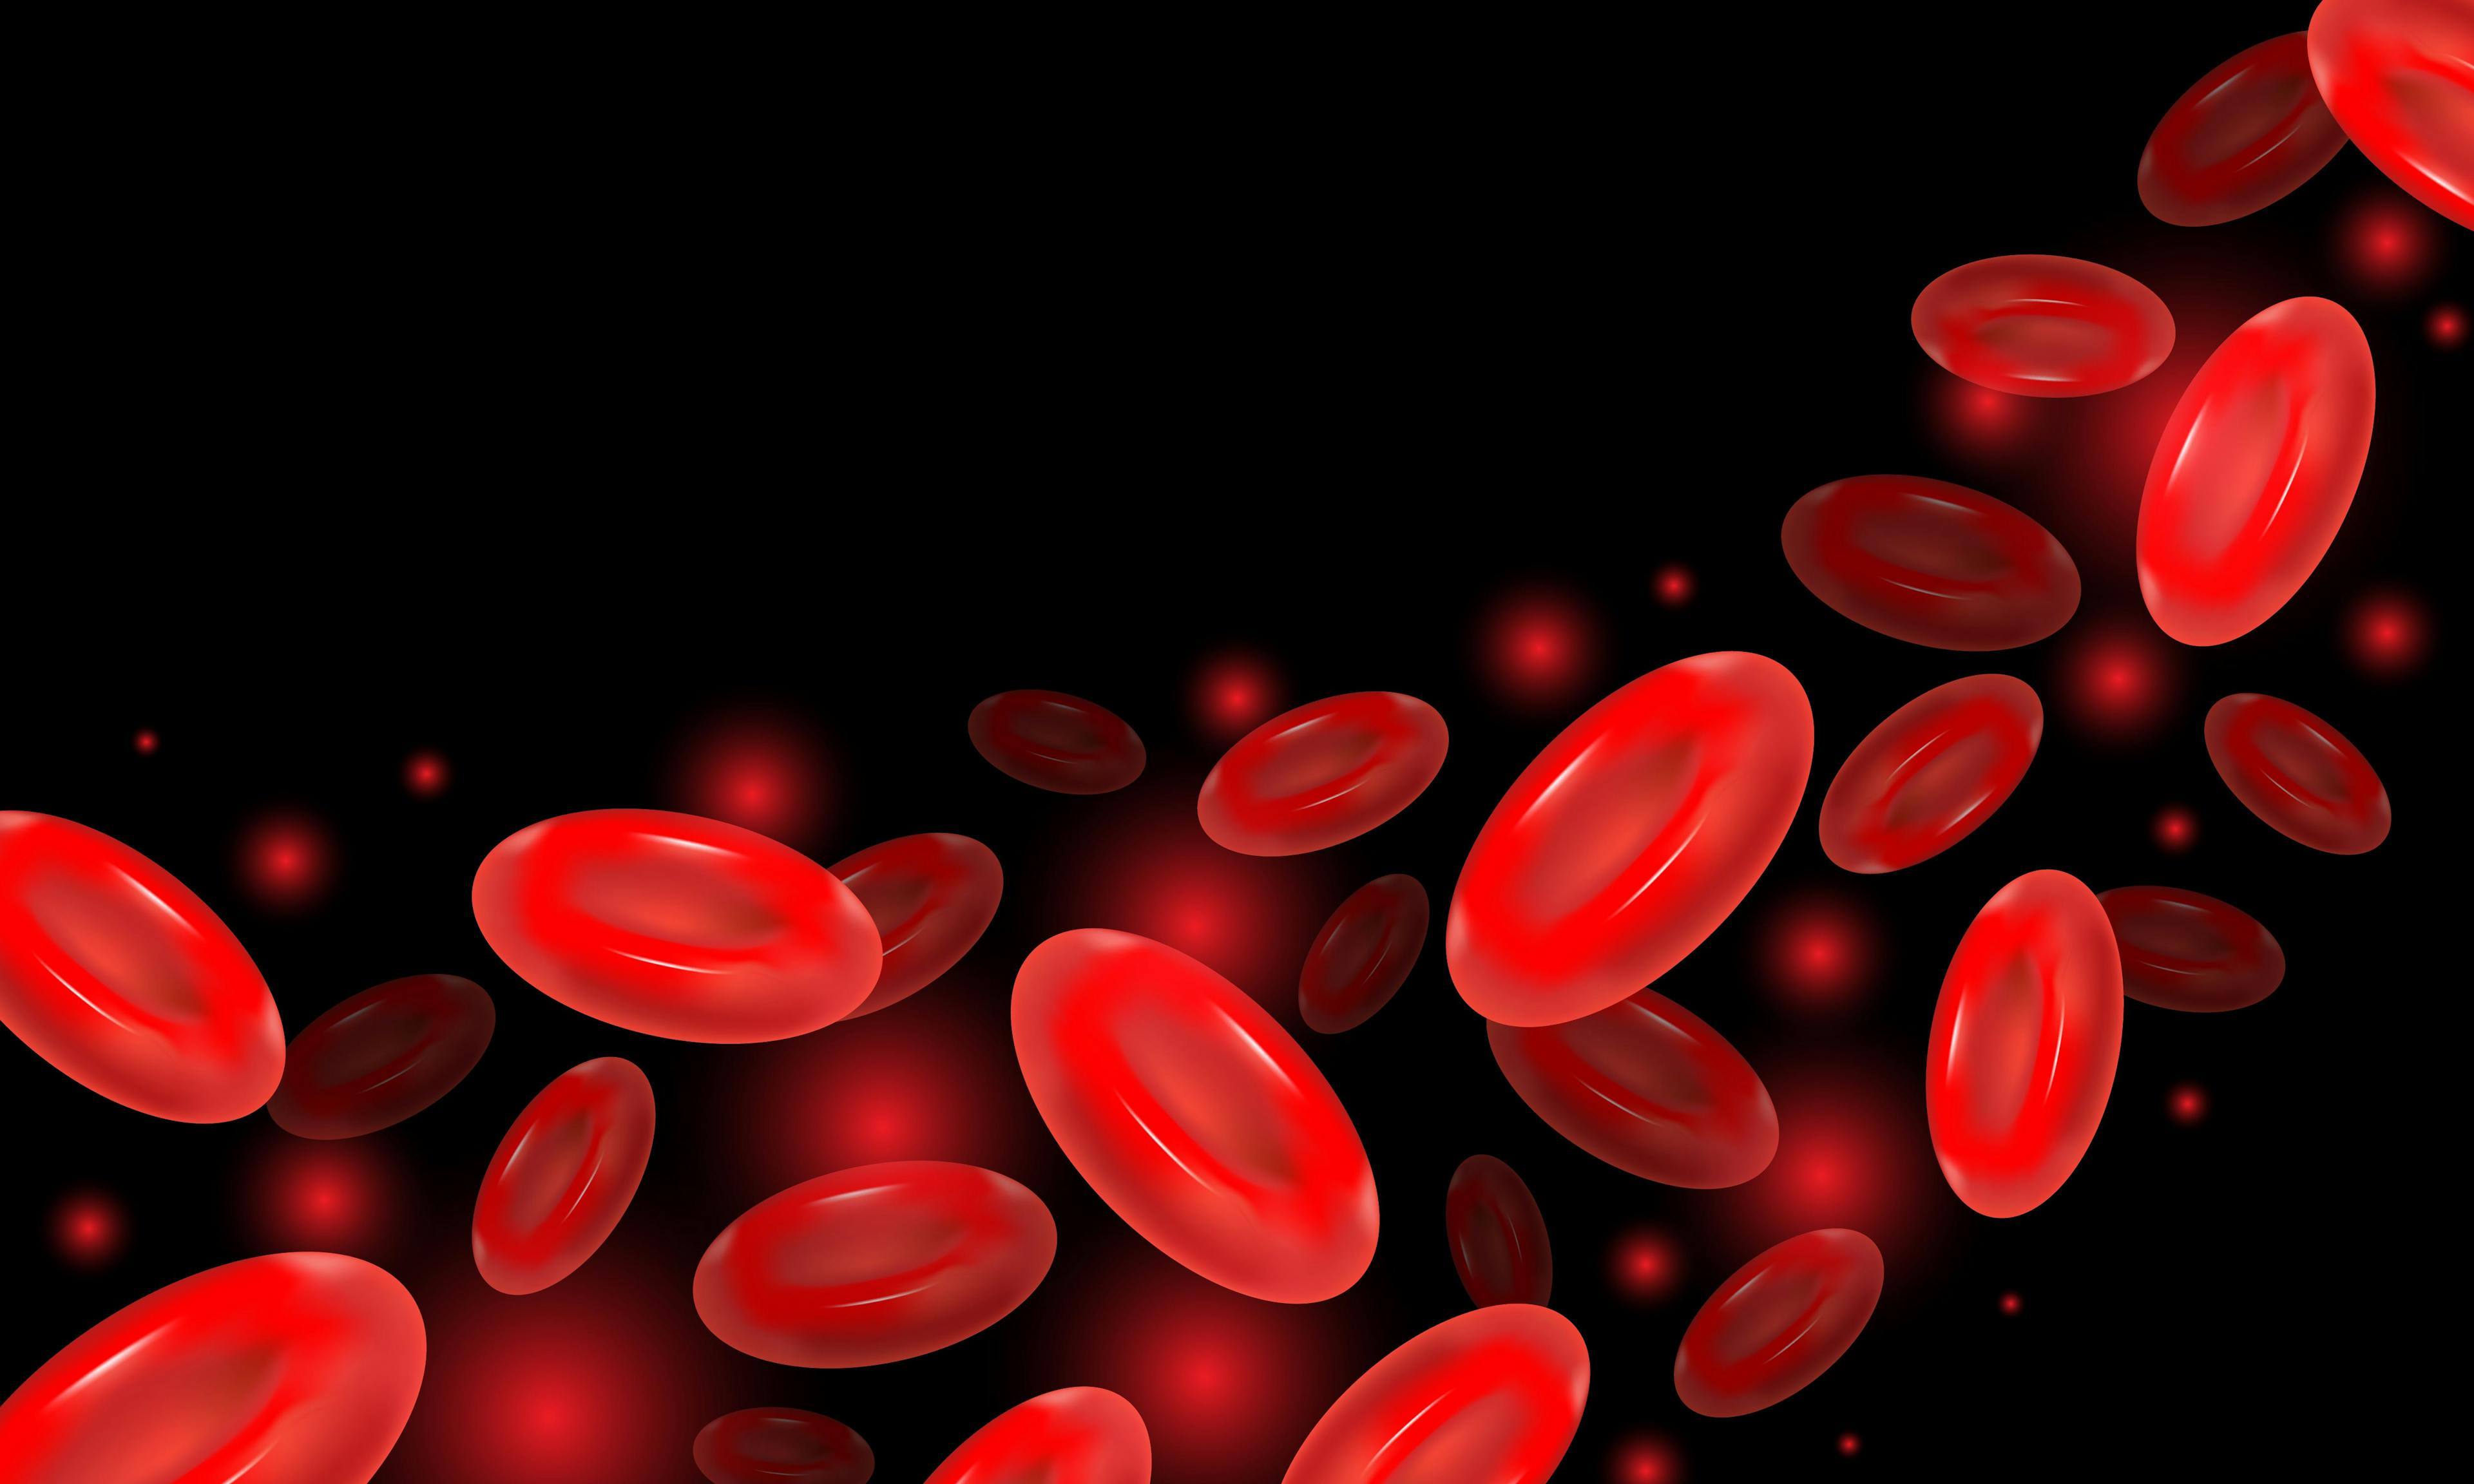 Red Blood Cells | image credit: Svetlana - stock.adobe.com